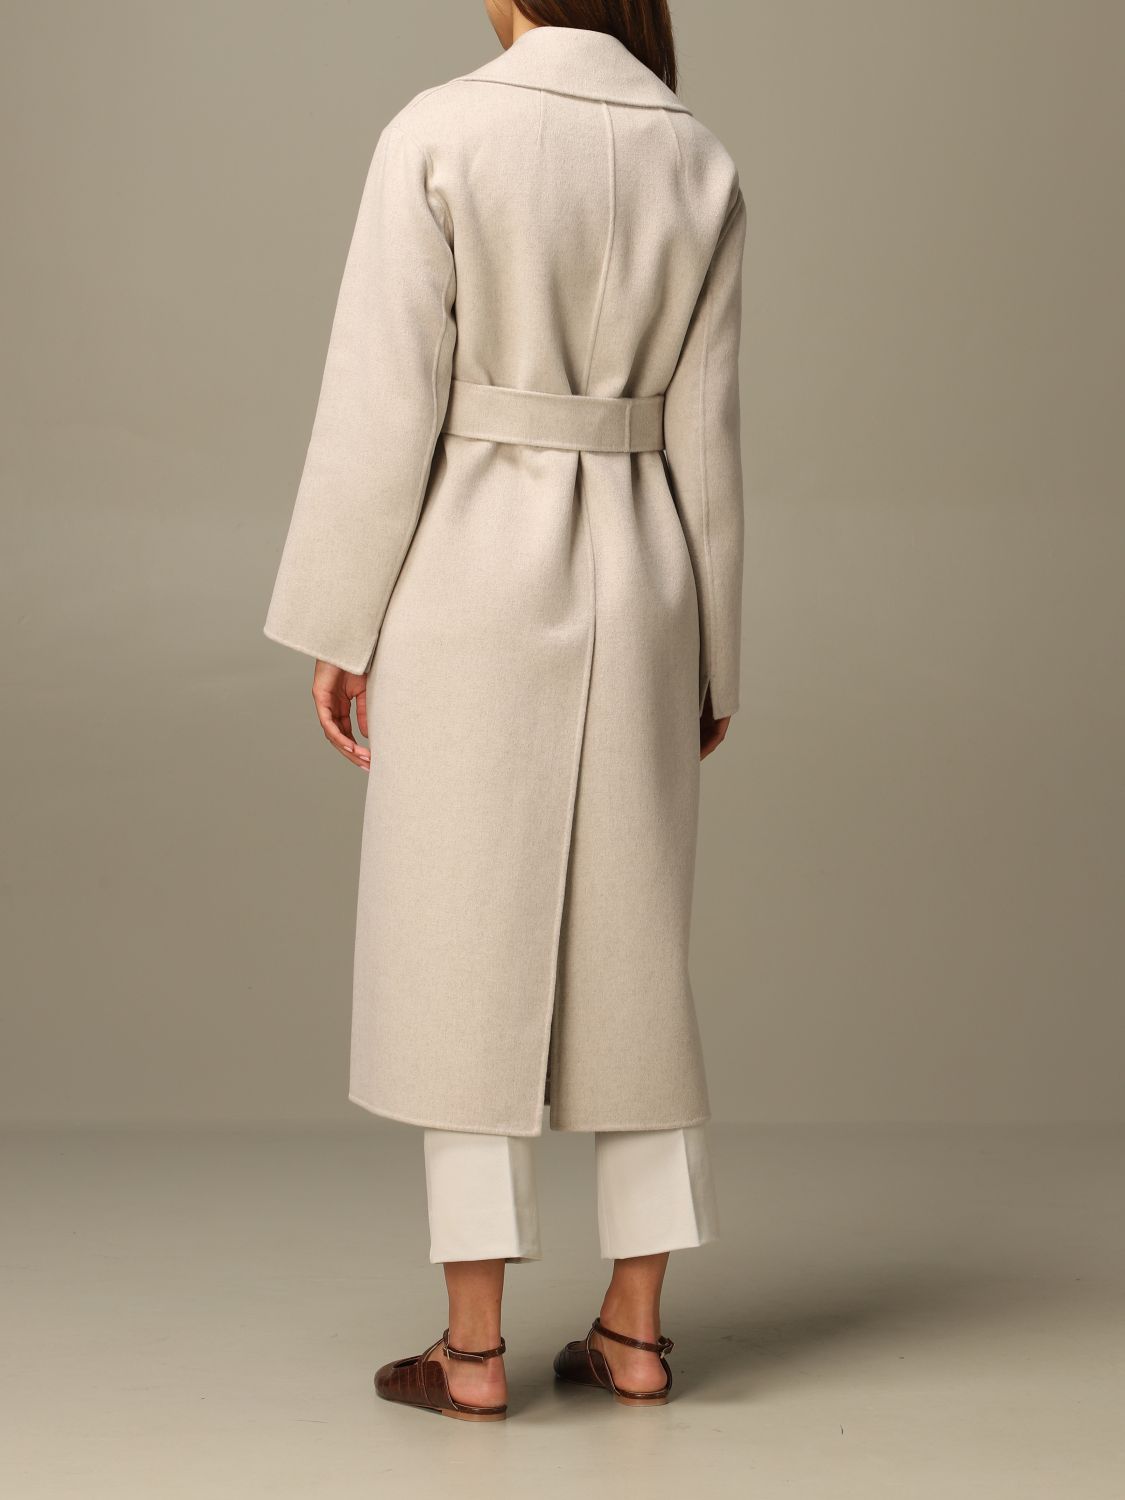 S MAX MARA: Lugano coat in virgin wool | Coat S Max Mara Women Mastic ...